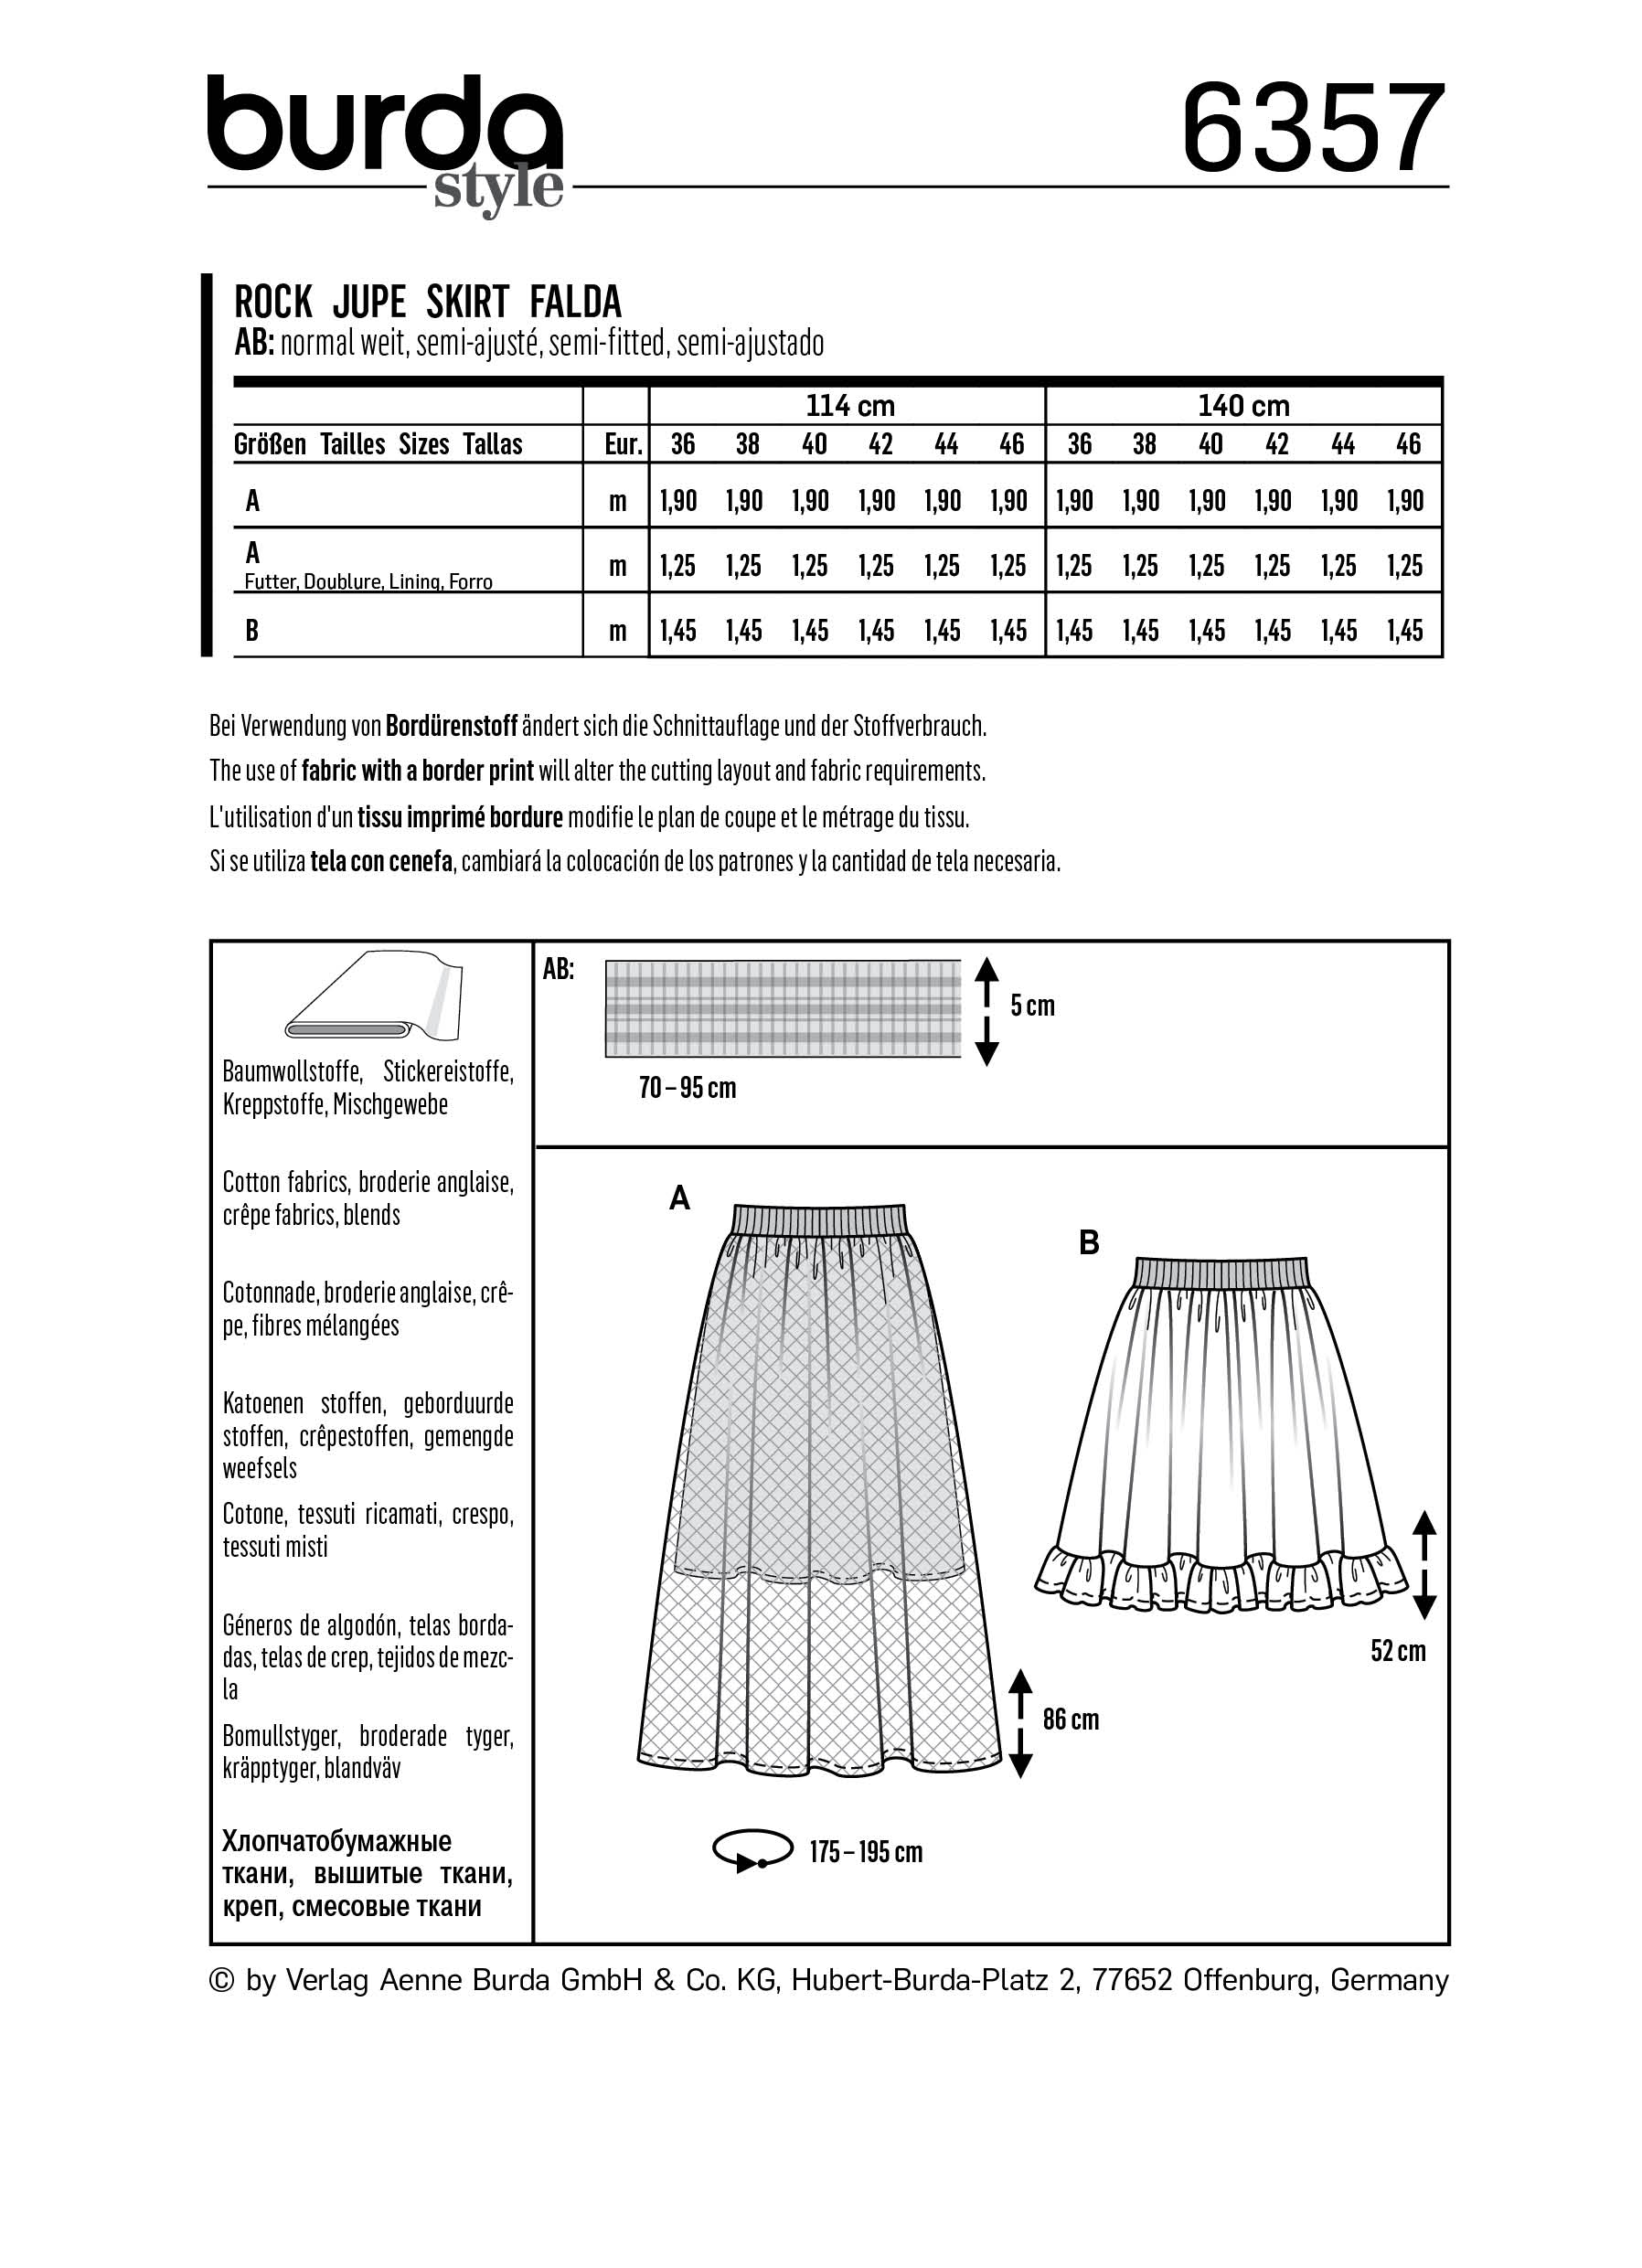 Burda Skirt 6357 - The Fold Line